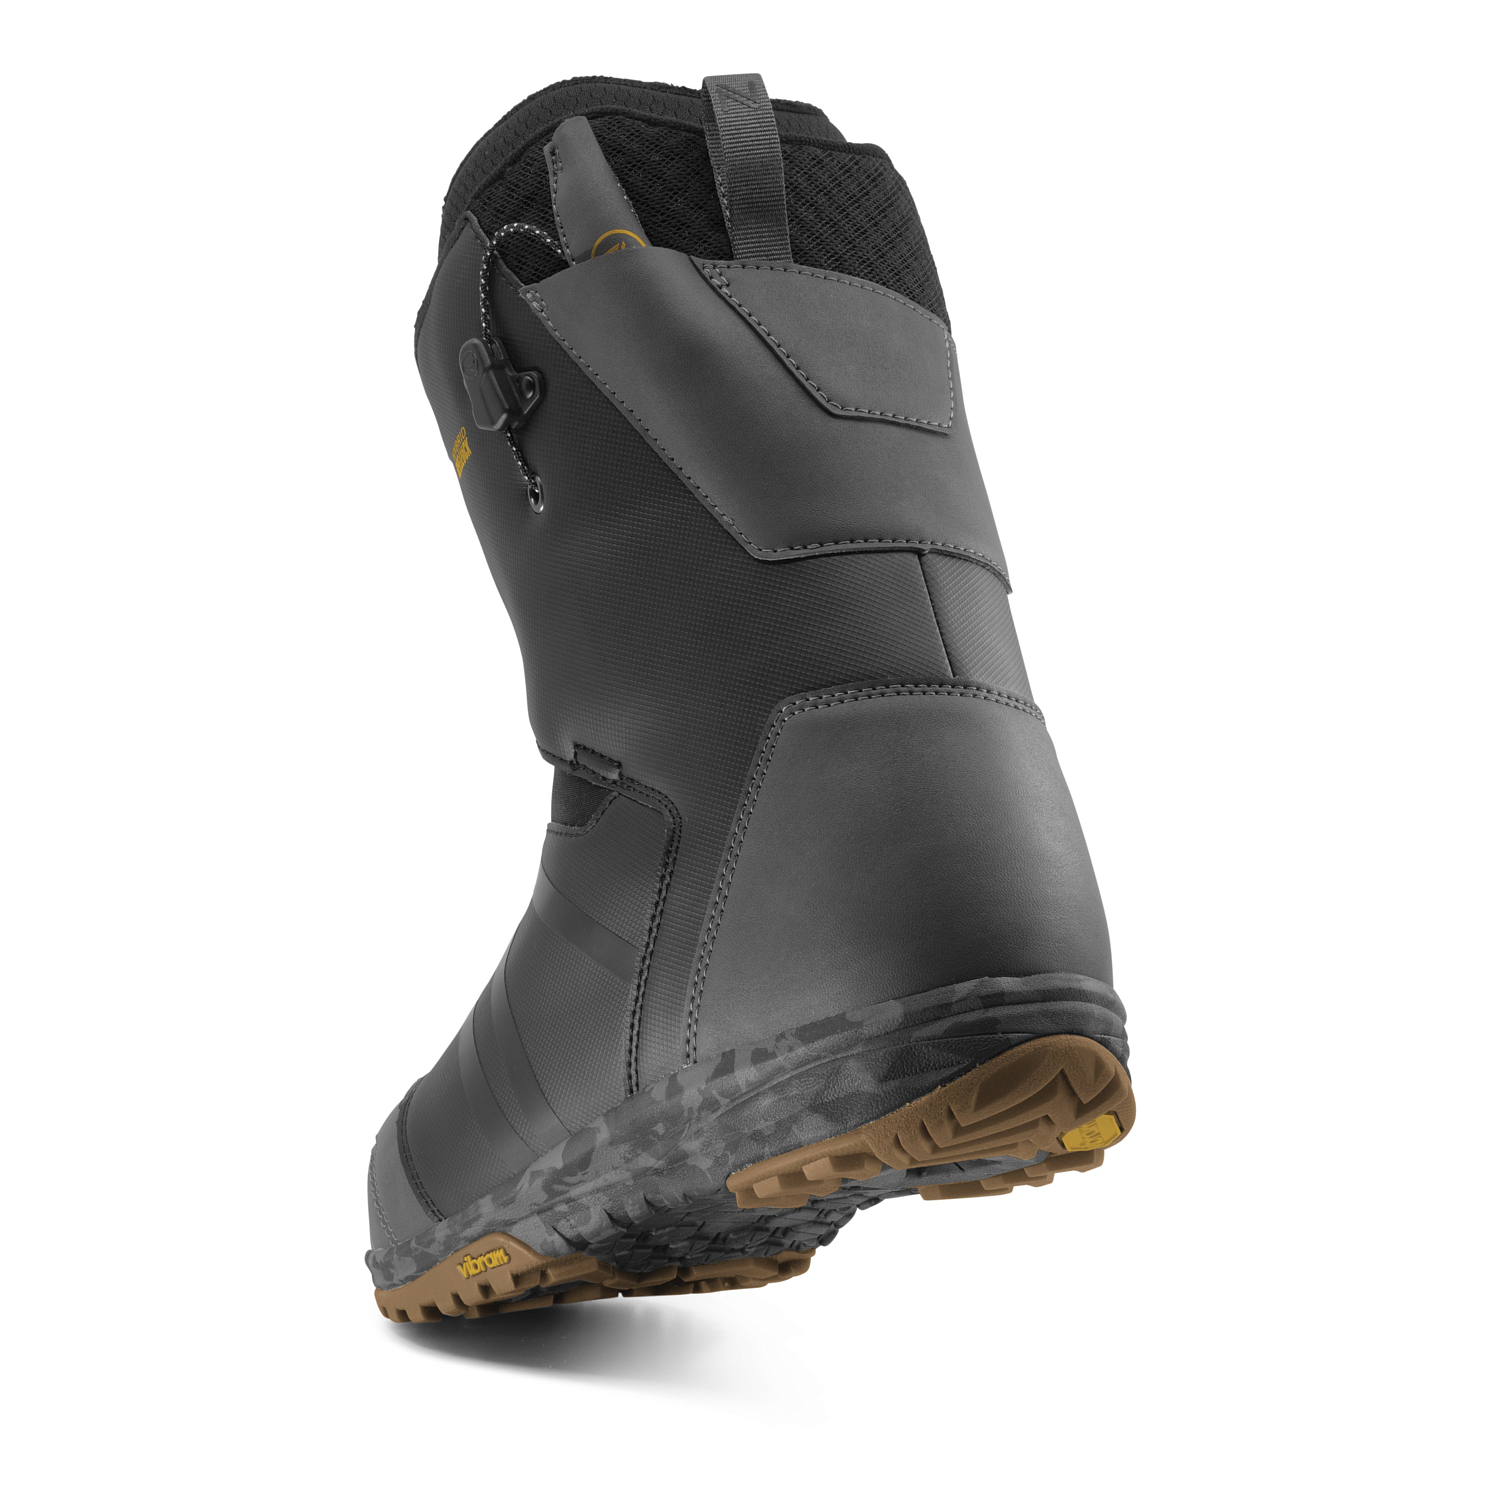 Ботинки для сноуборда NIDECKER 2019-20 Tracer Black